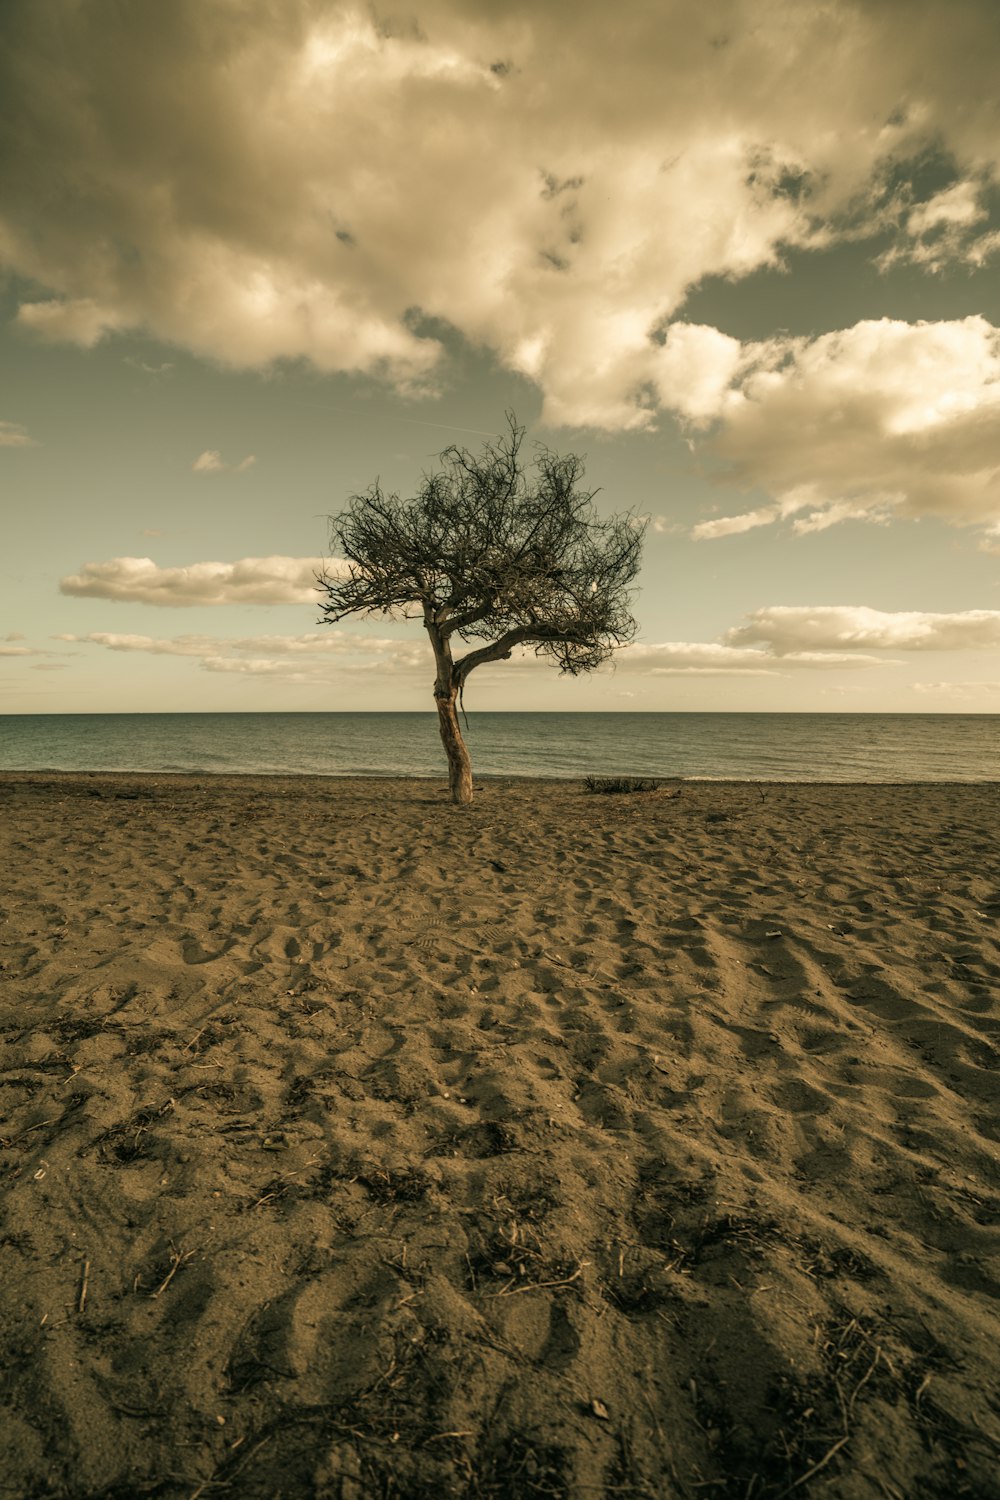 a lone tree on a sandy beach under a cloudy sky